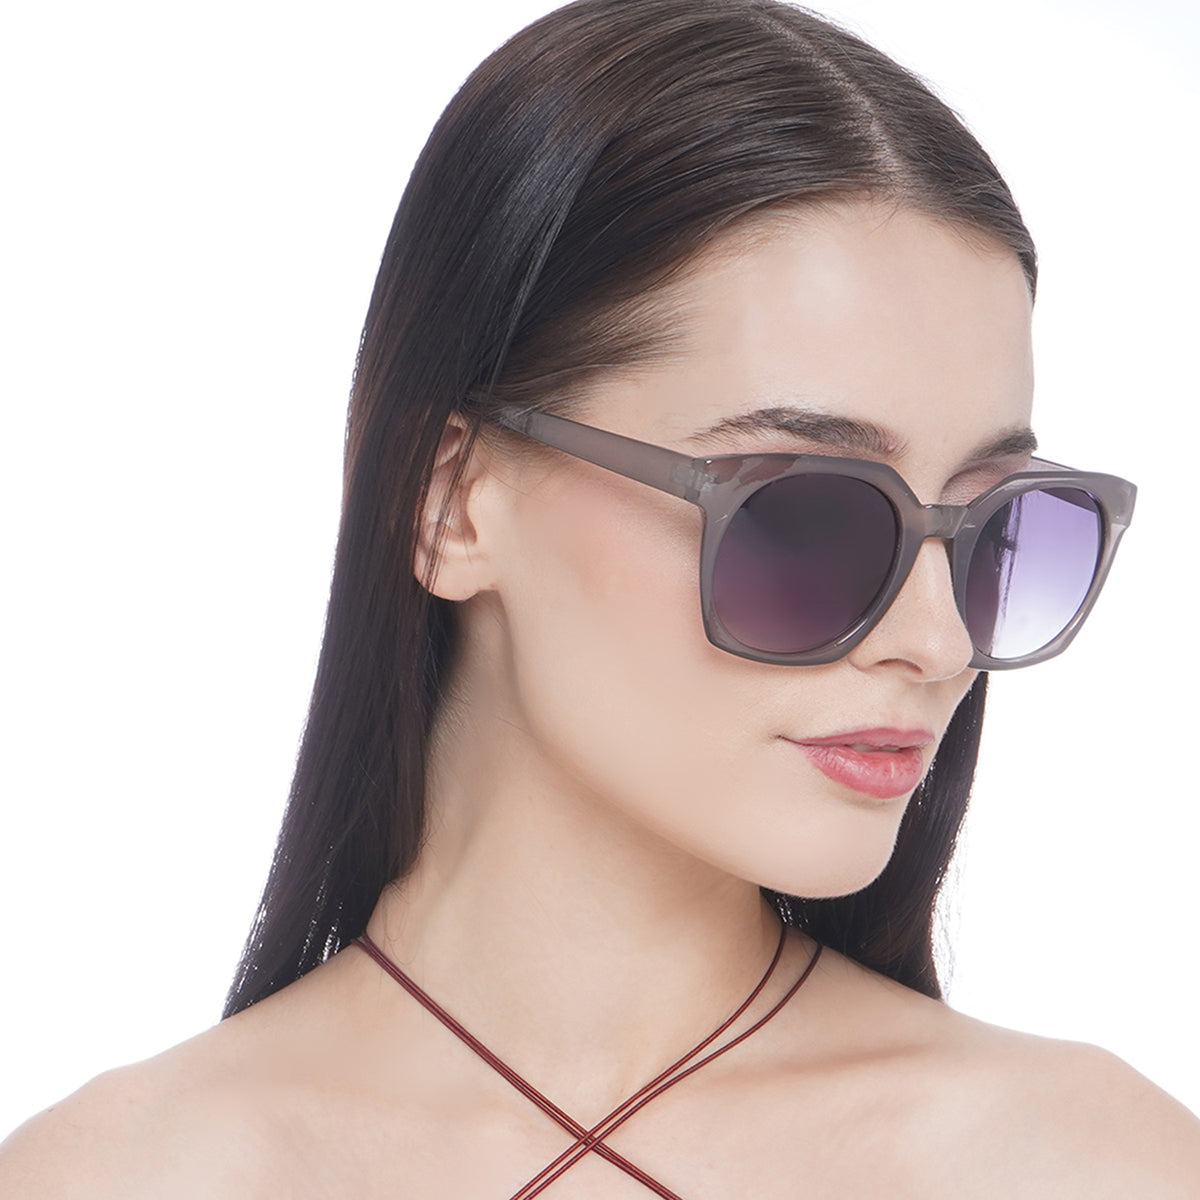 Buy Titan Women's 100% UV protected Grey Lens Pilot Sunglasses at Amazon.in